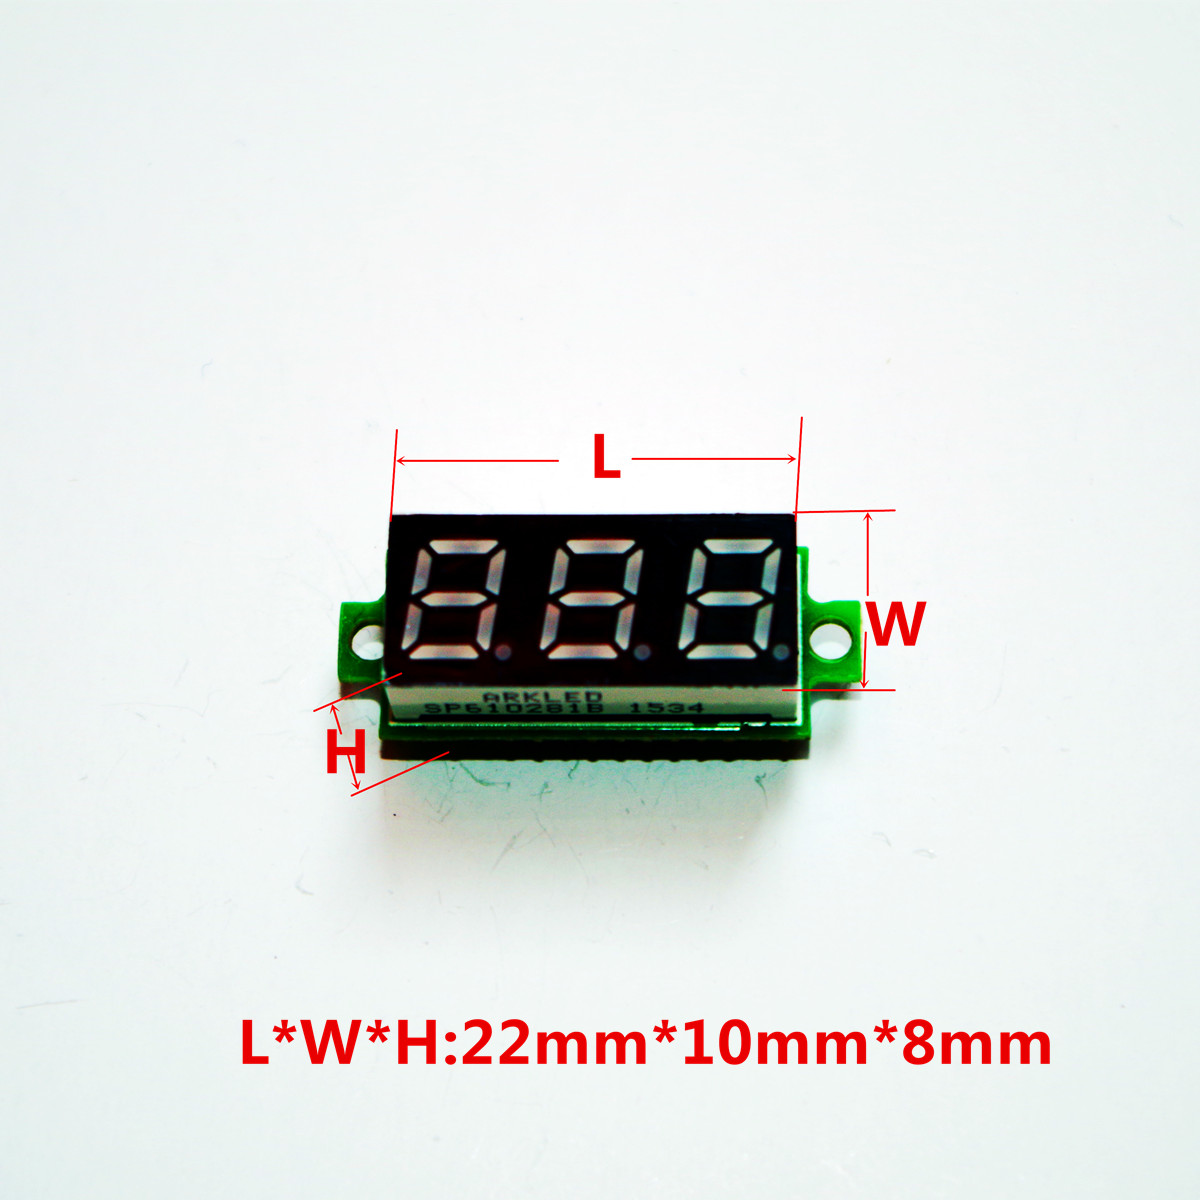 ME-TM11123 Red Digital Thermometer LED Temperature Display